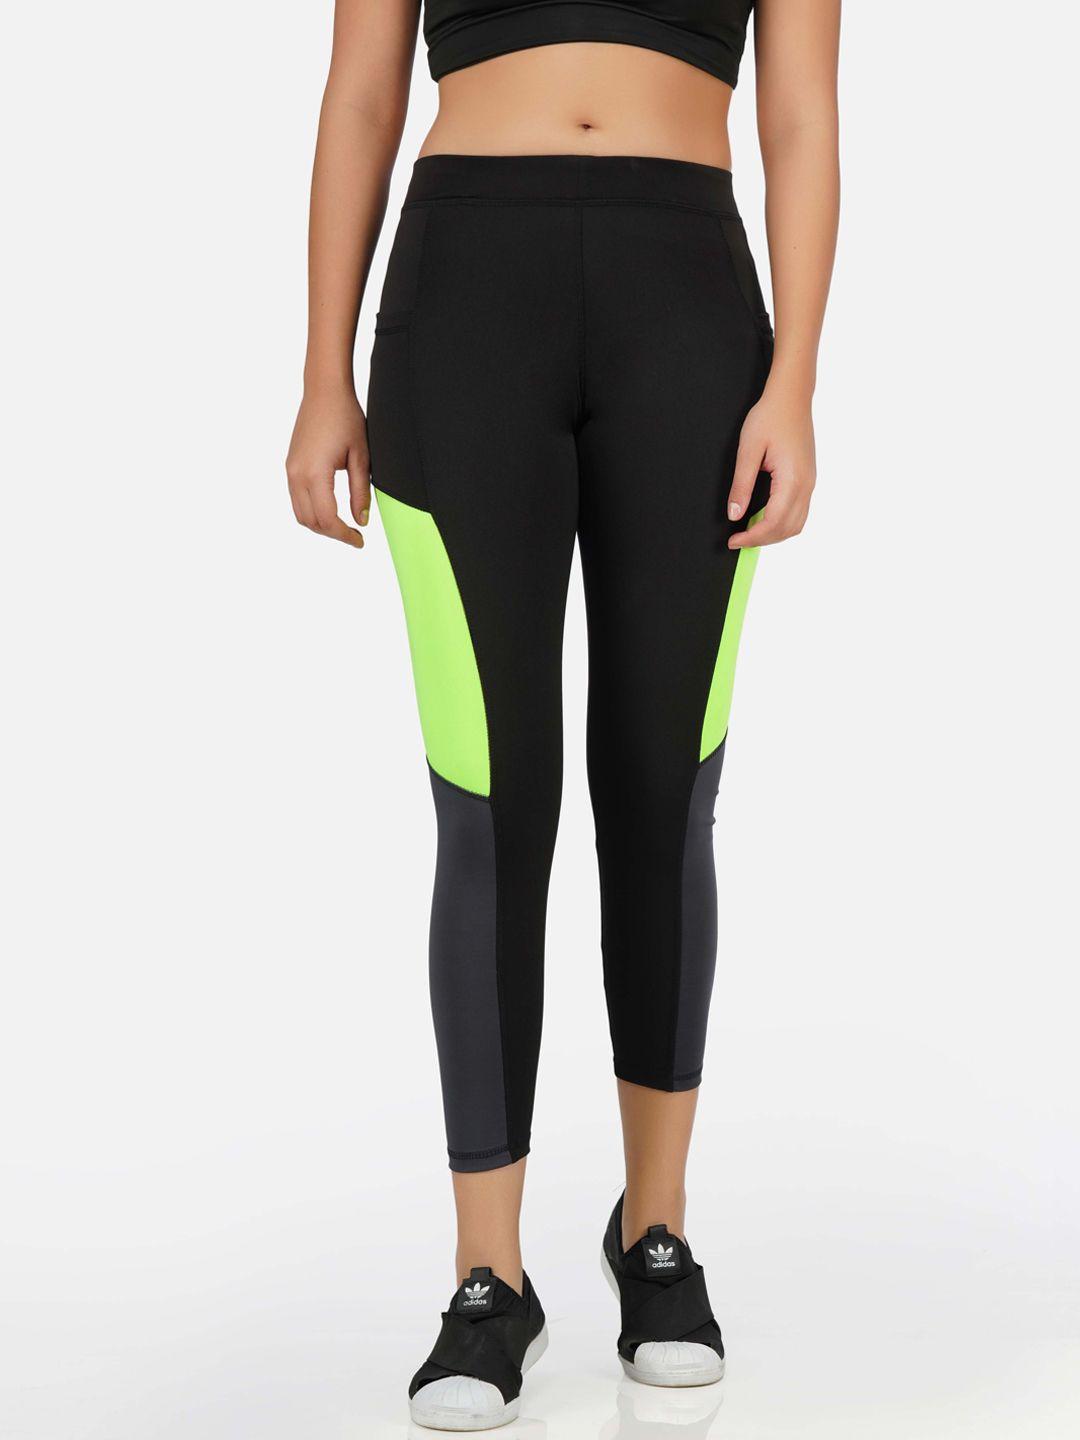 neu look fashion women black & neon printed gym tights